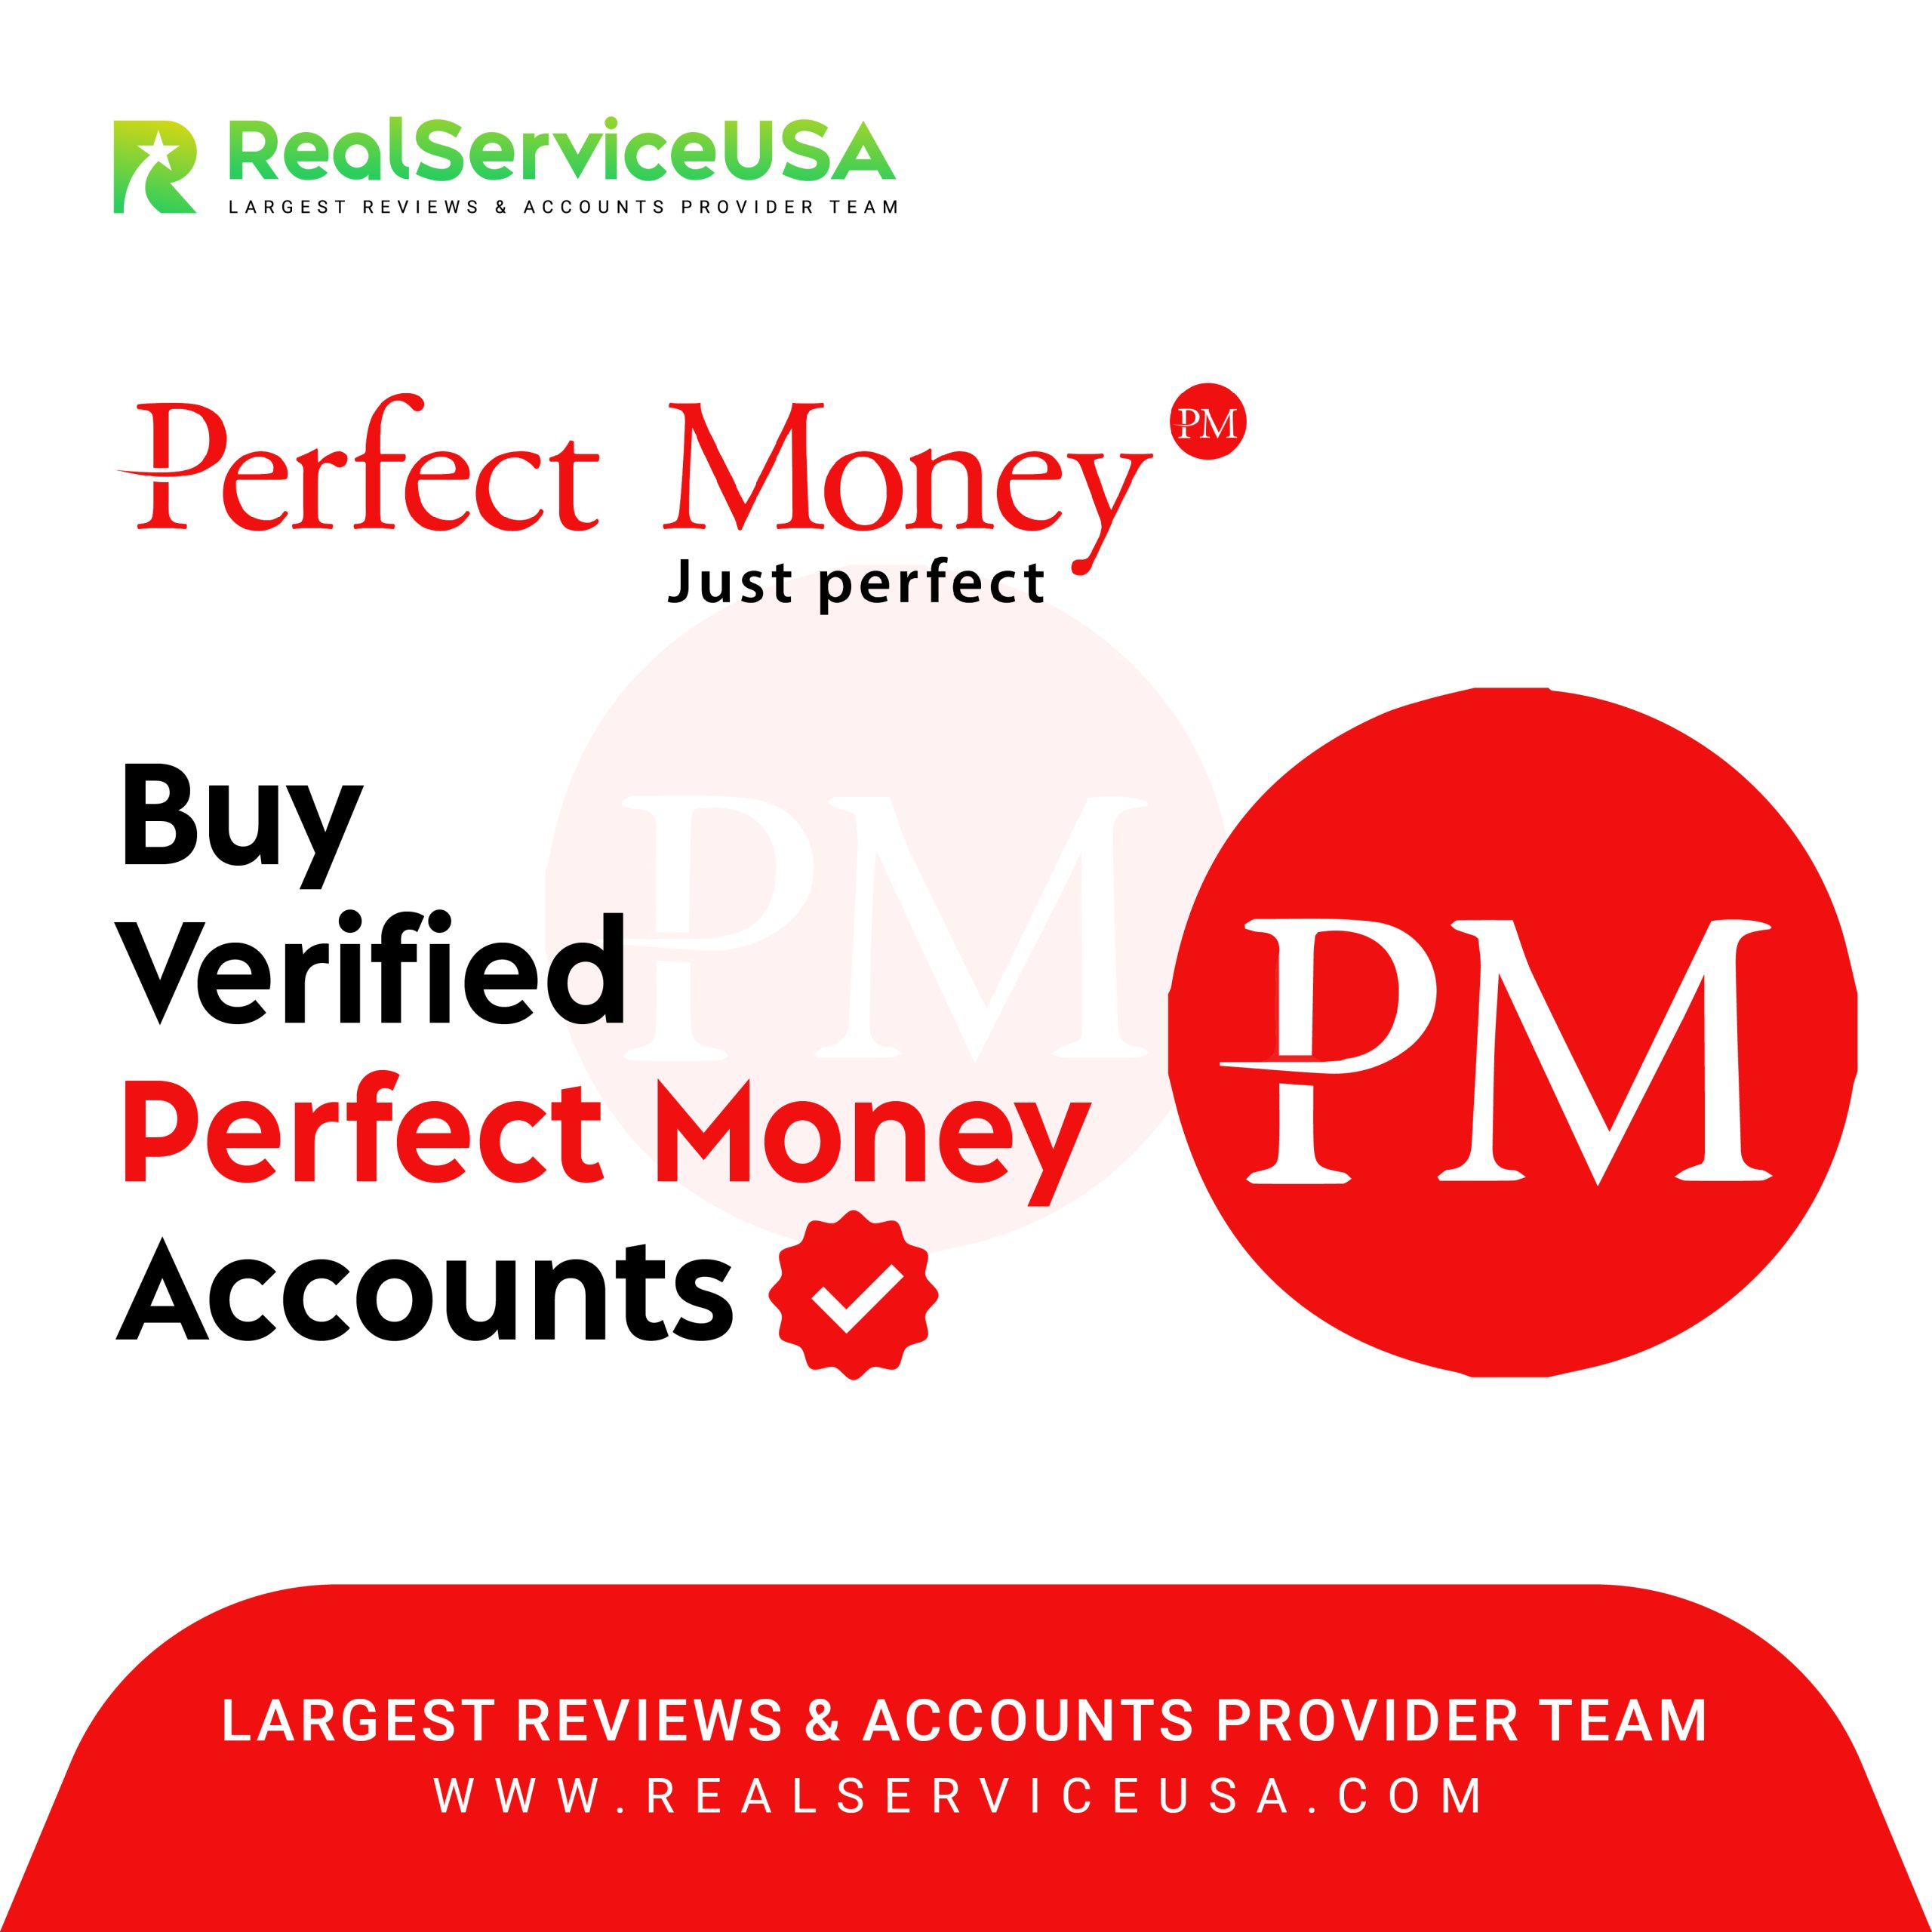 Verified Perfect Money Accounts